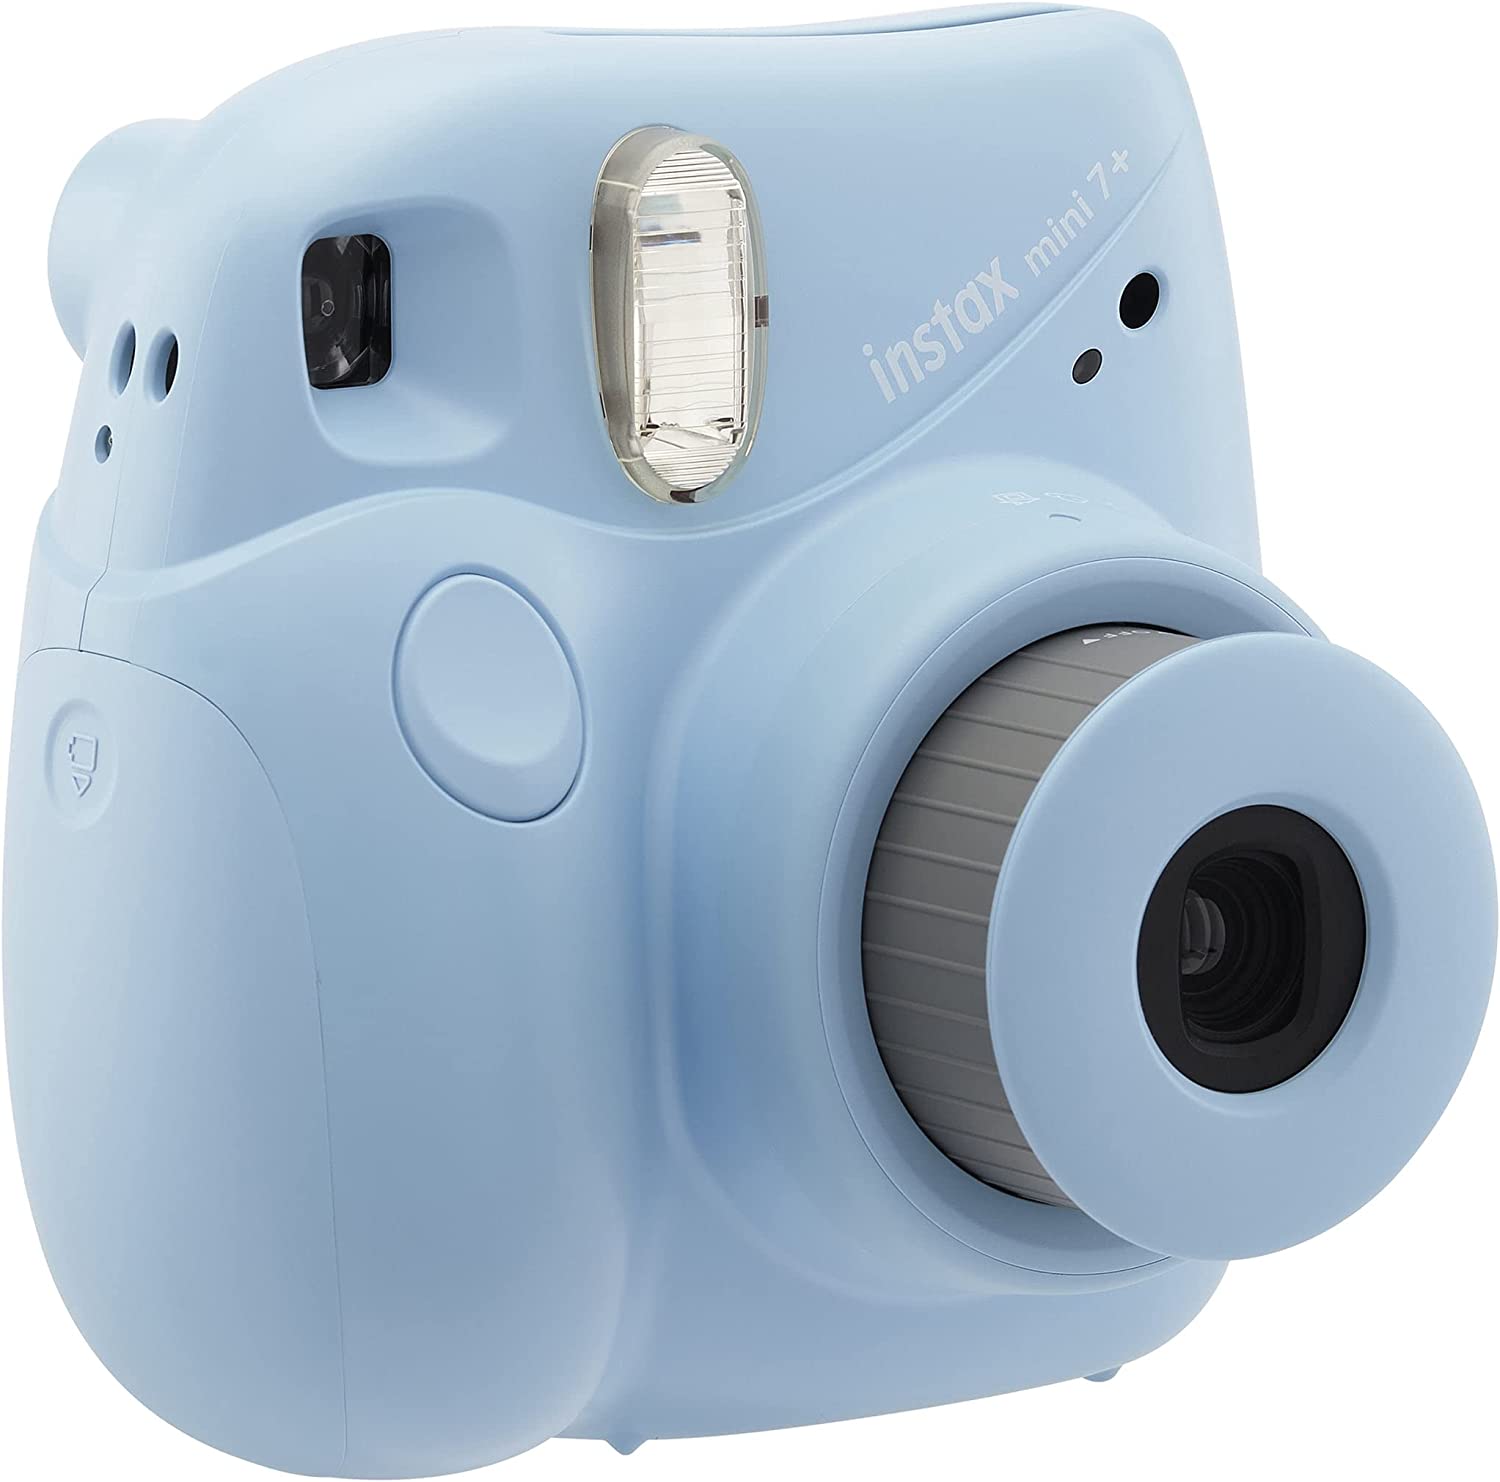 Fujifilm Instax Mini 7+ Instant Camera Light Blue CAMERA ONLY - NO FILM INCLUDED